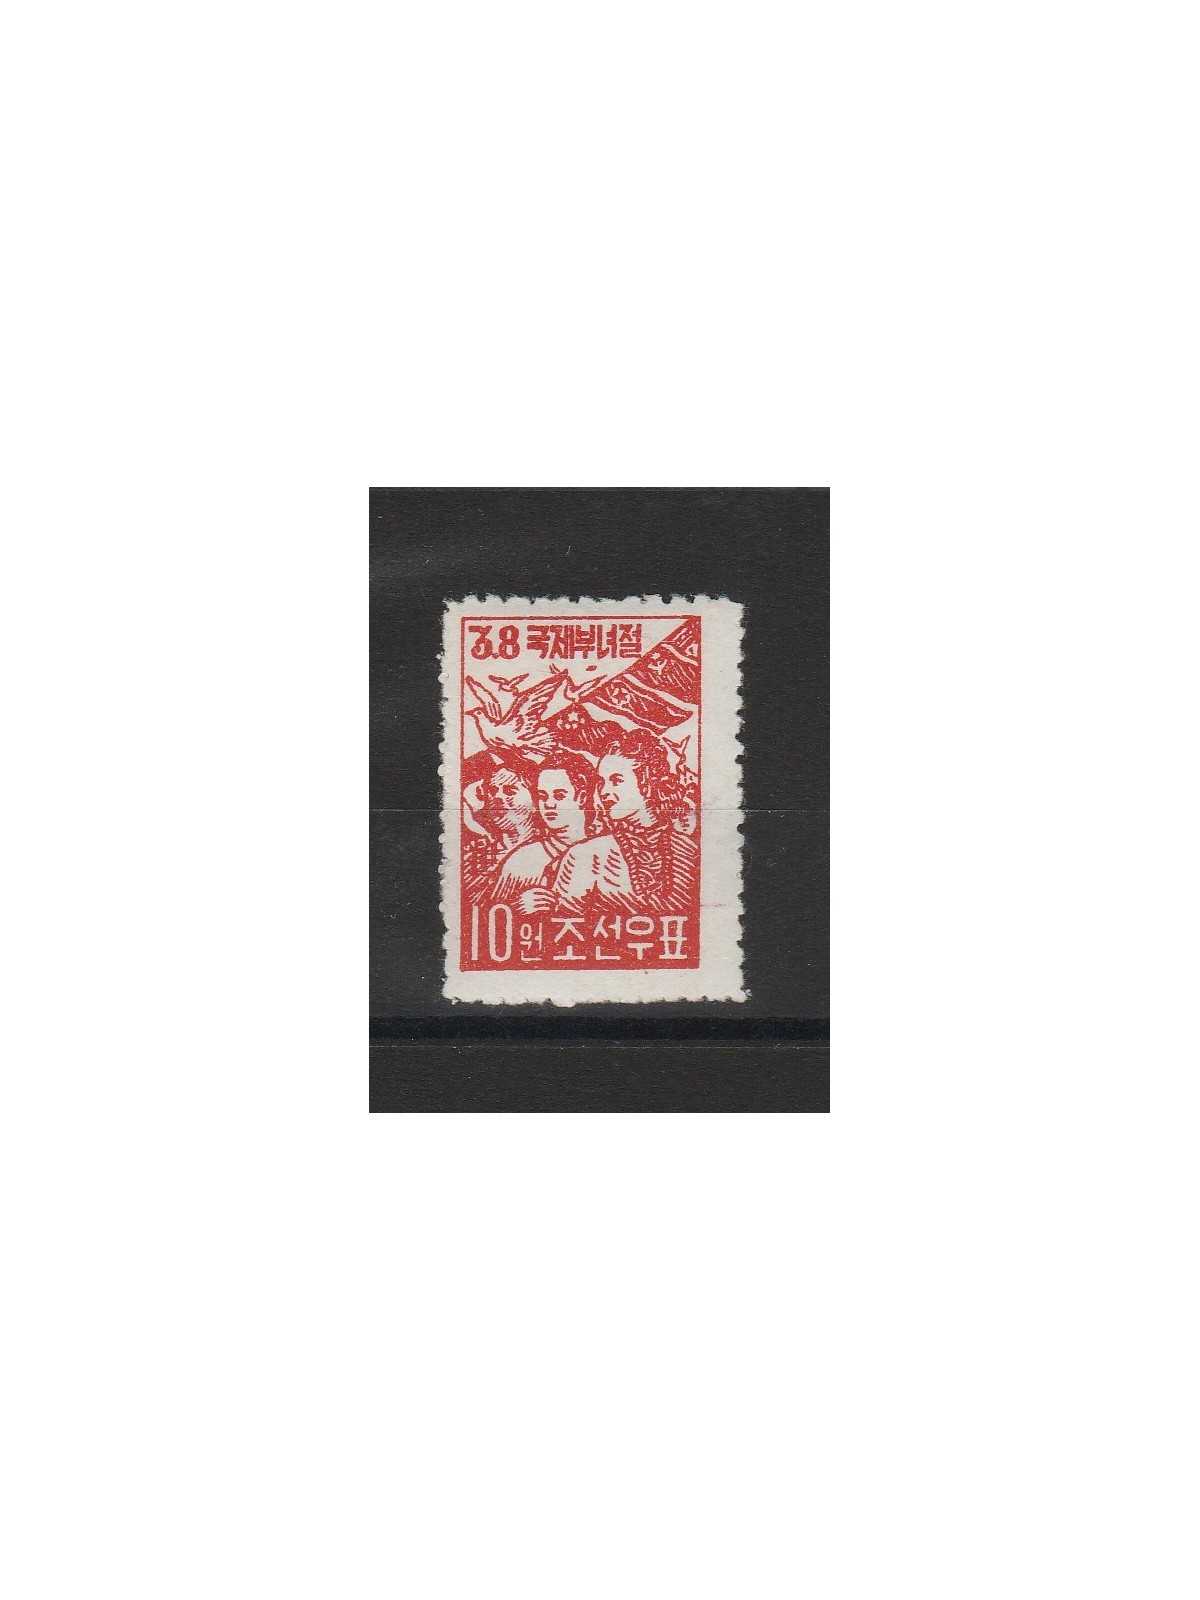 COREA 1954 GIORNATA DELLA GIOVENTU 1 V MNH MF55856